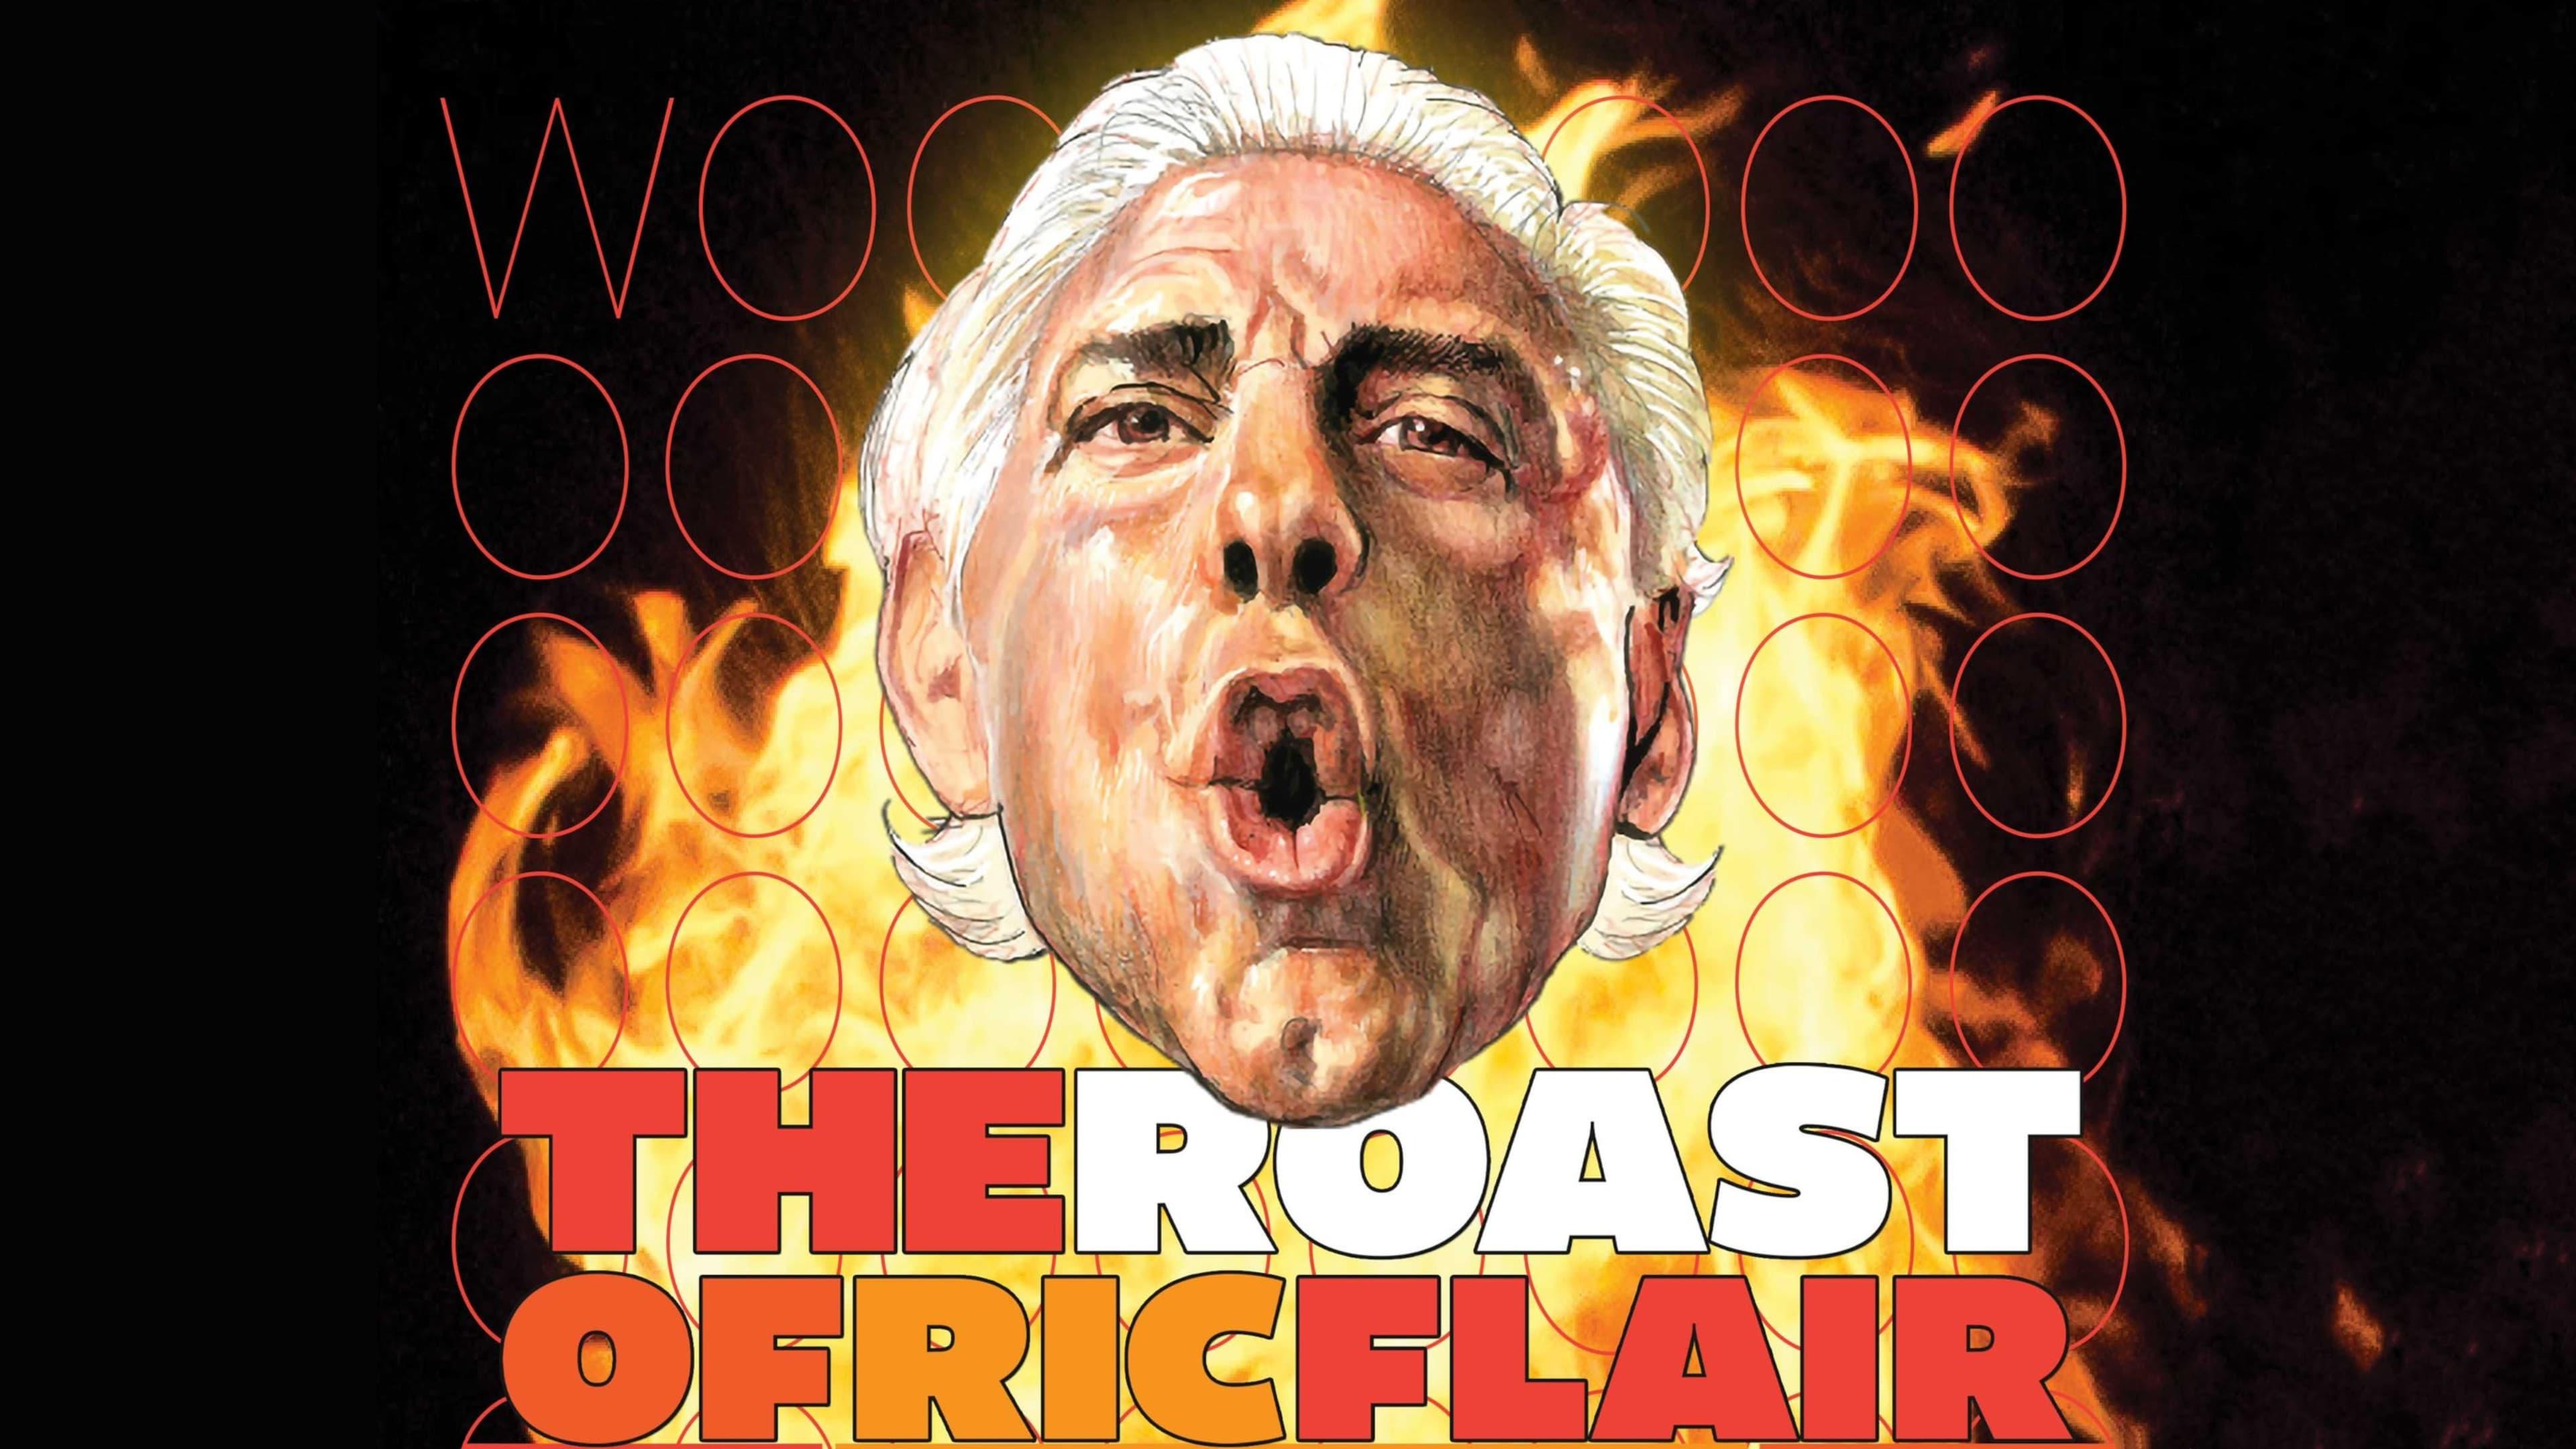 Starrcast V: The Roast of Ric Flair backdrop